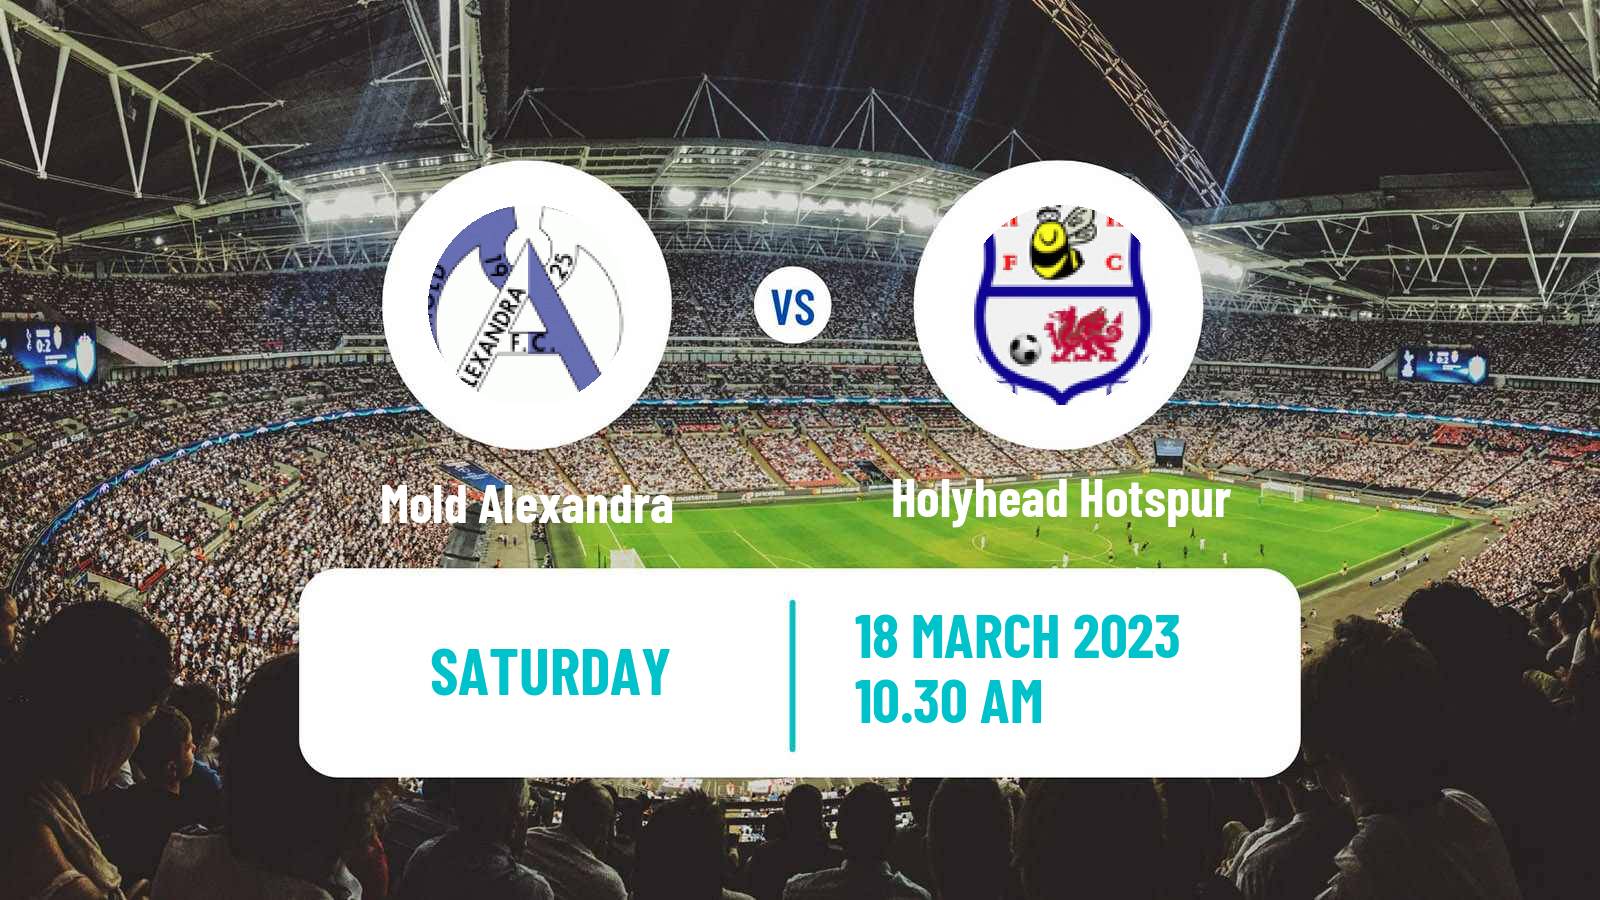 Soccer Welsh Cymru North Mold Alexandra - Holyhead Hotspur